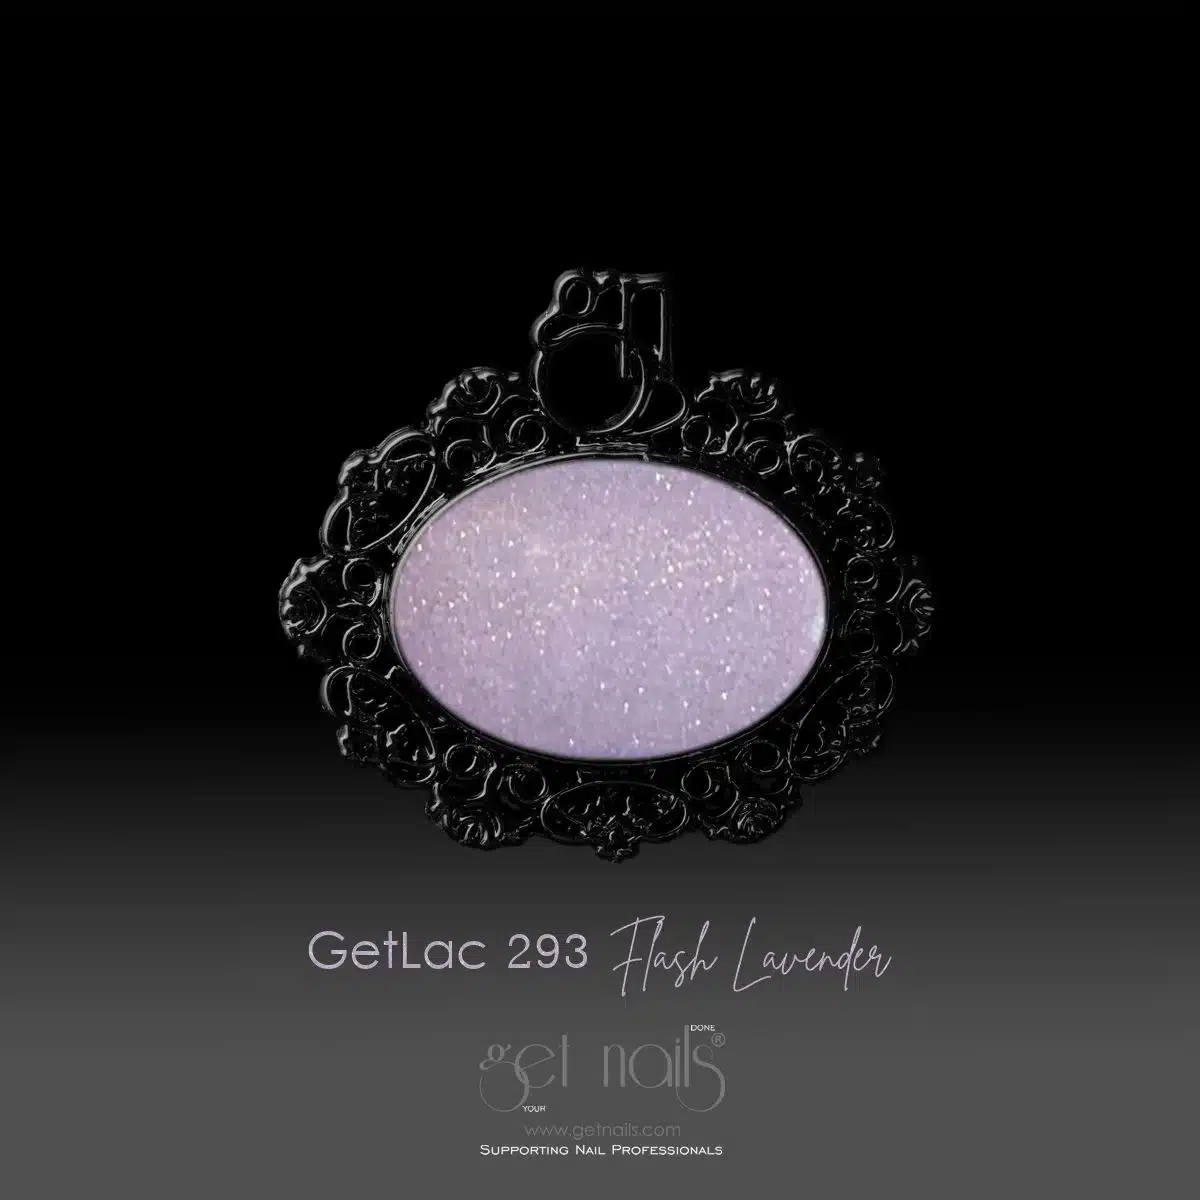 Get Nails Austria - GetLac 293 Flash Lavender 15g